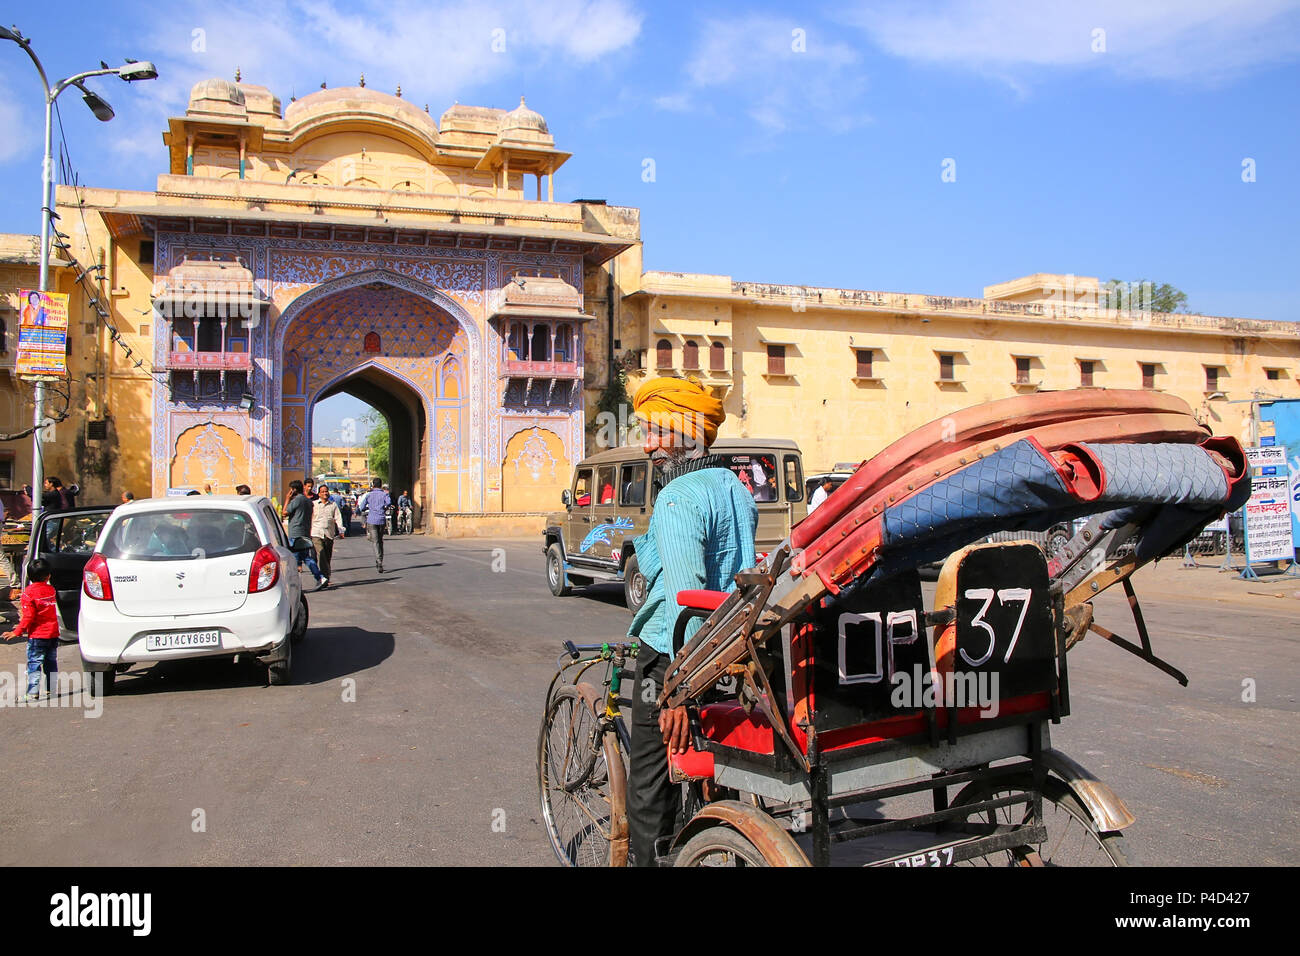 Cycle rickshaw near City Palace in Jaipur, India. Palace was the seat of the Maharaja of Jaipur, the head of the Kachwaha Rajput clan. Stock Photo